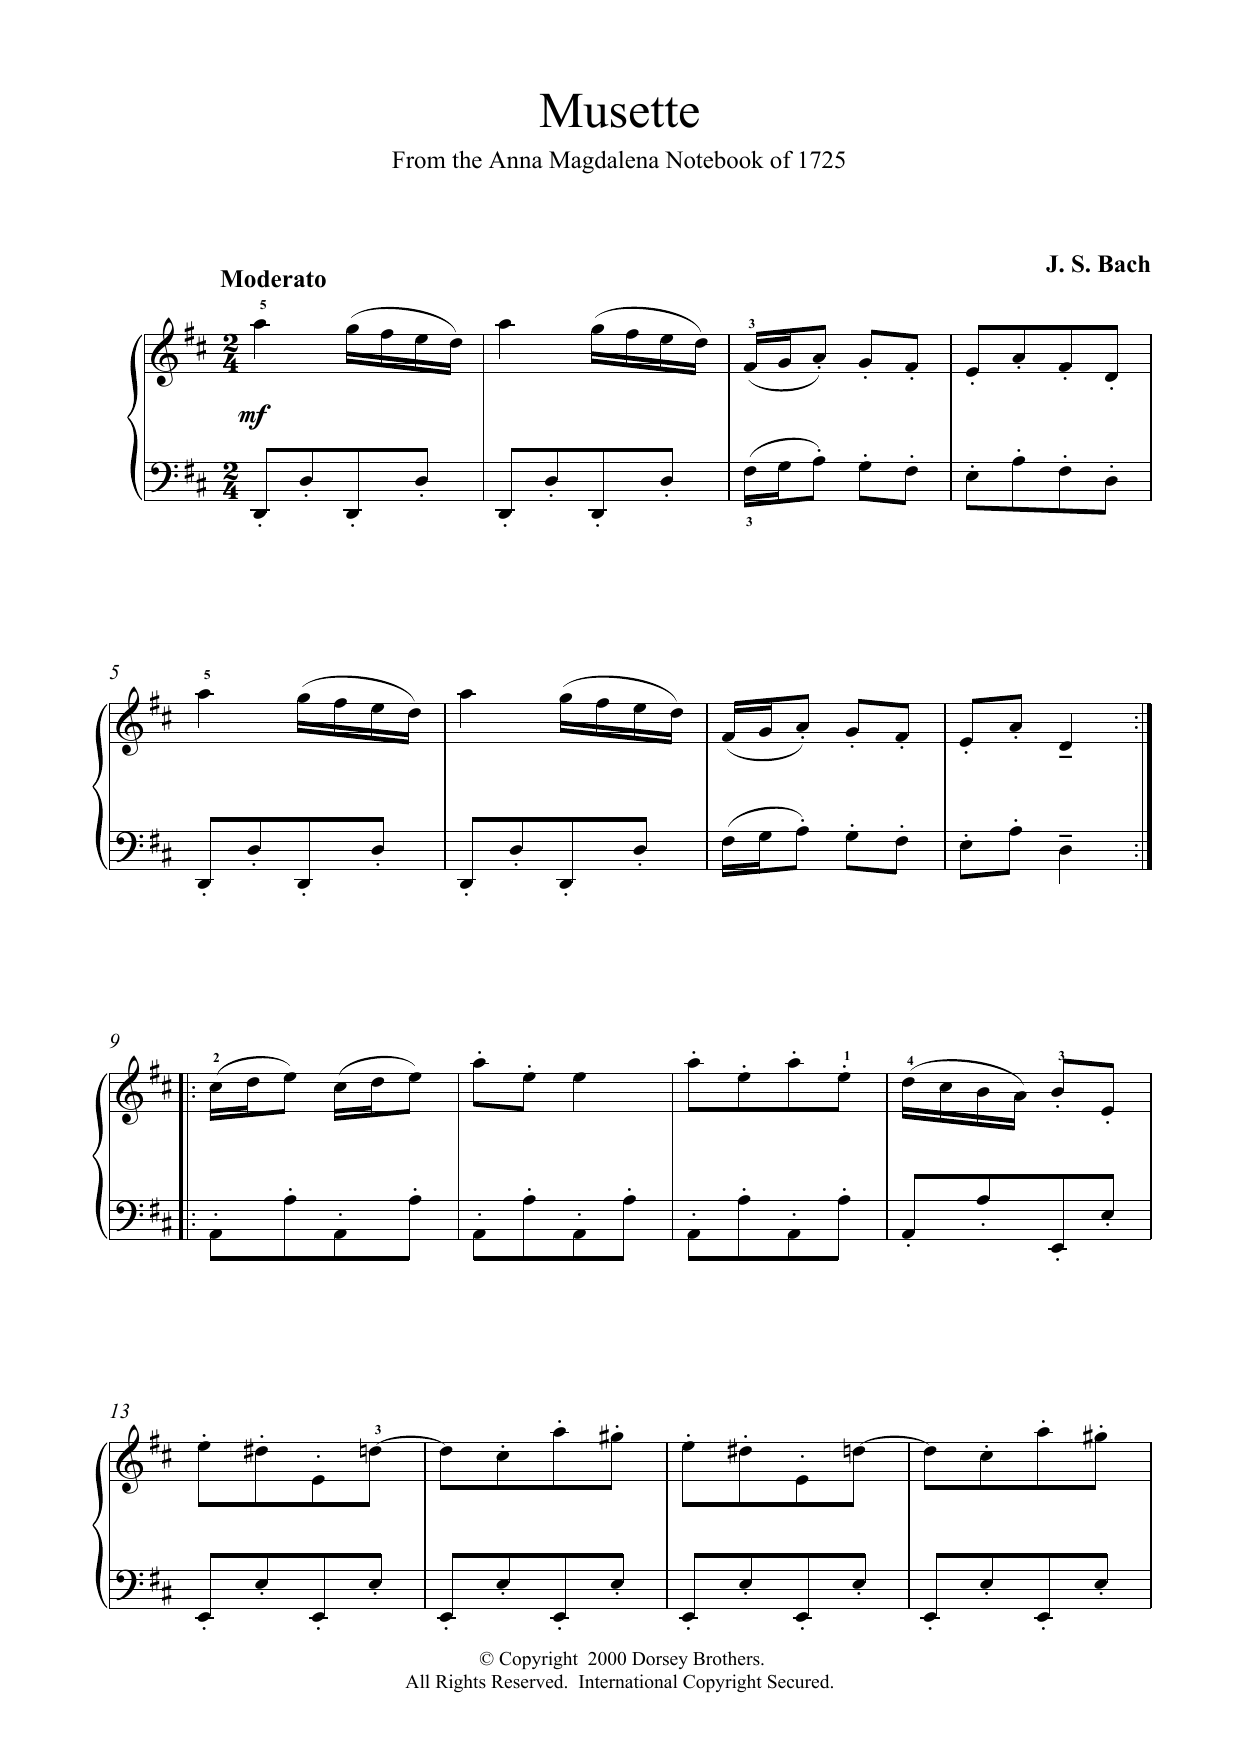 Johann Sebastian Bach Musette In D Major, BWV App. 126 Sheet Music Notes & Chords for Piano - Download or Print PDF